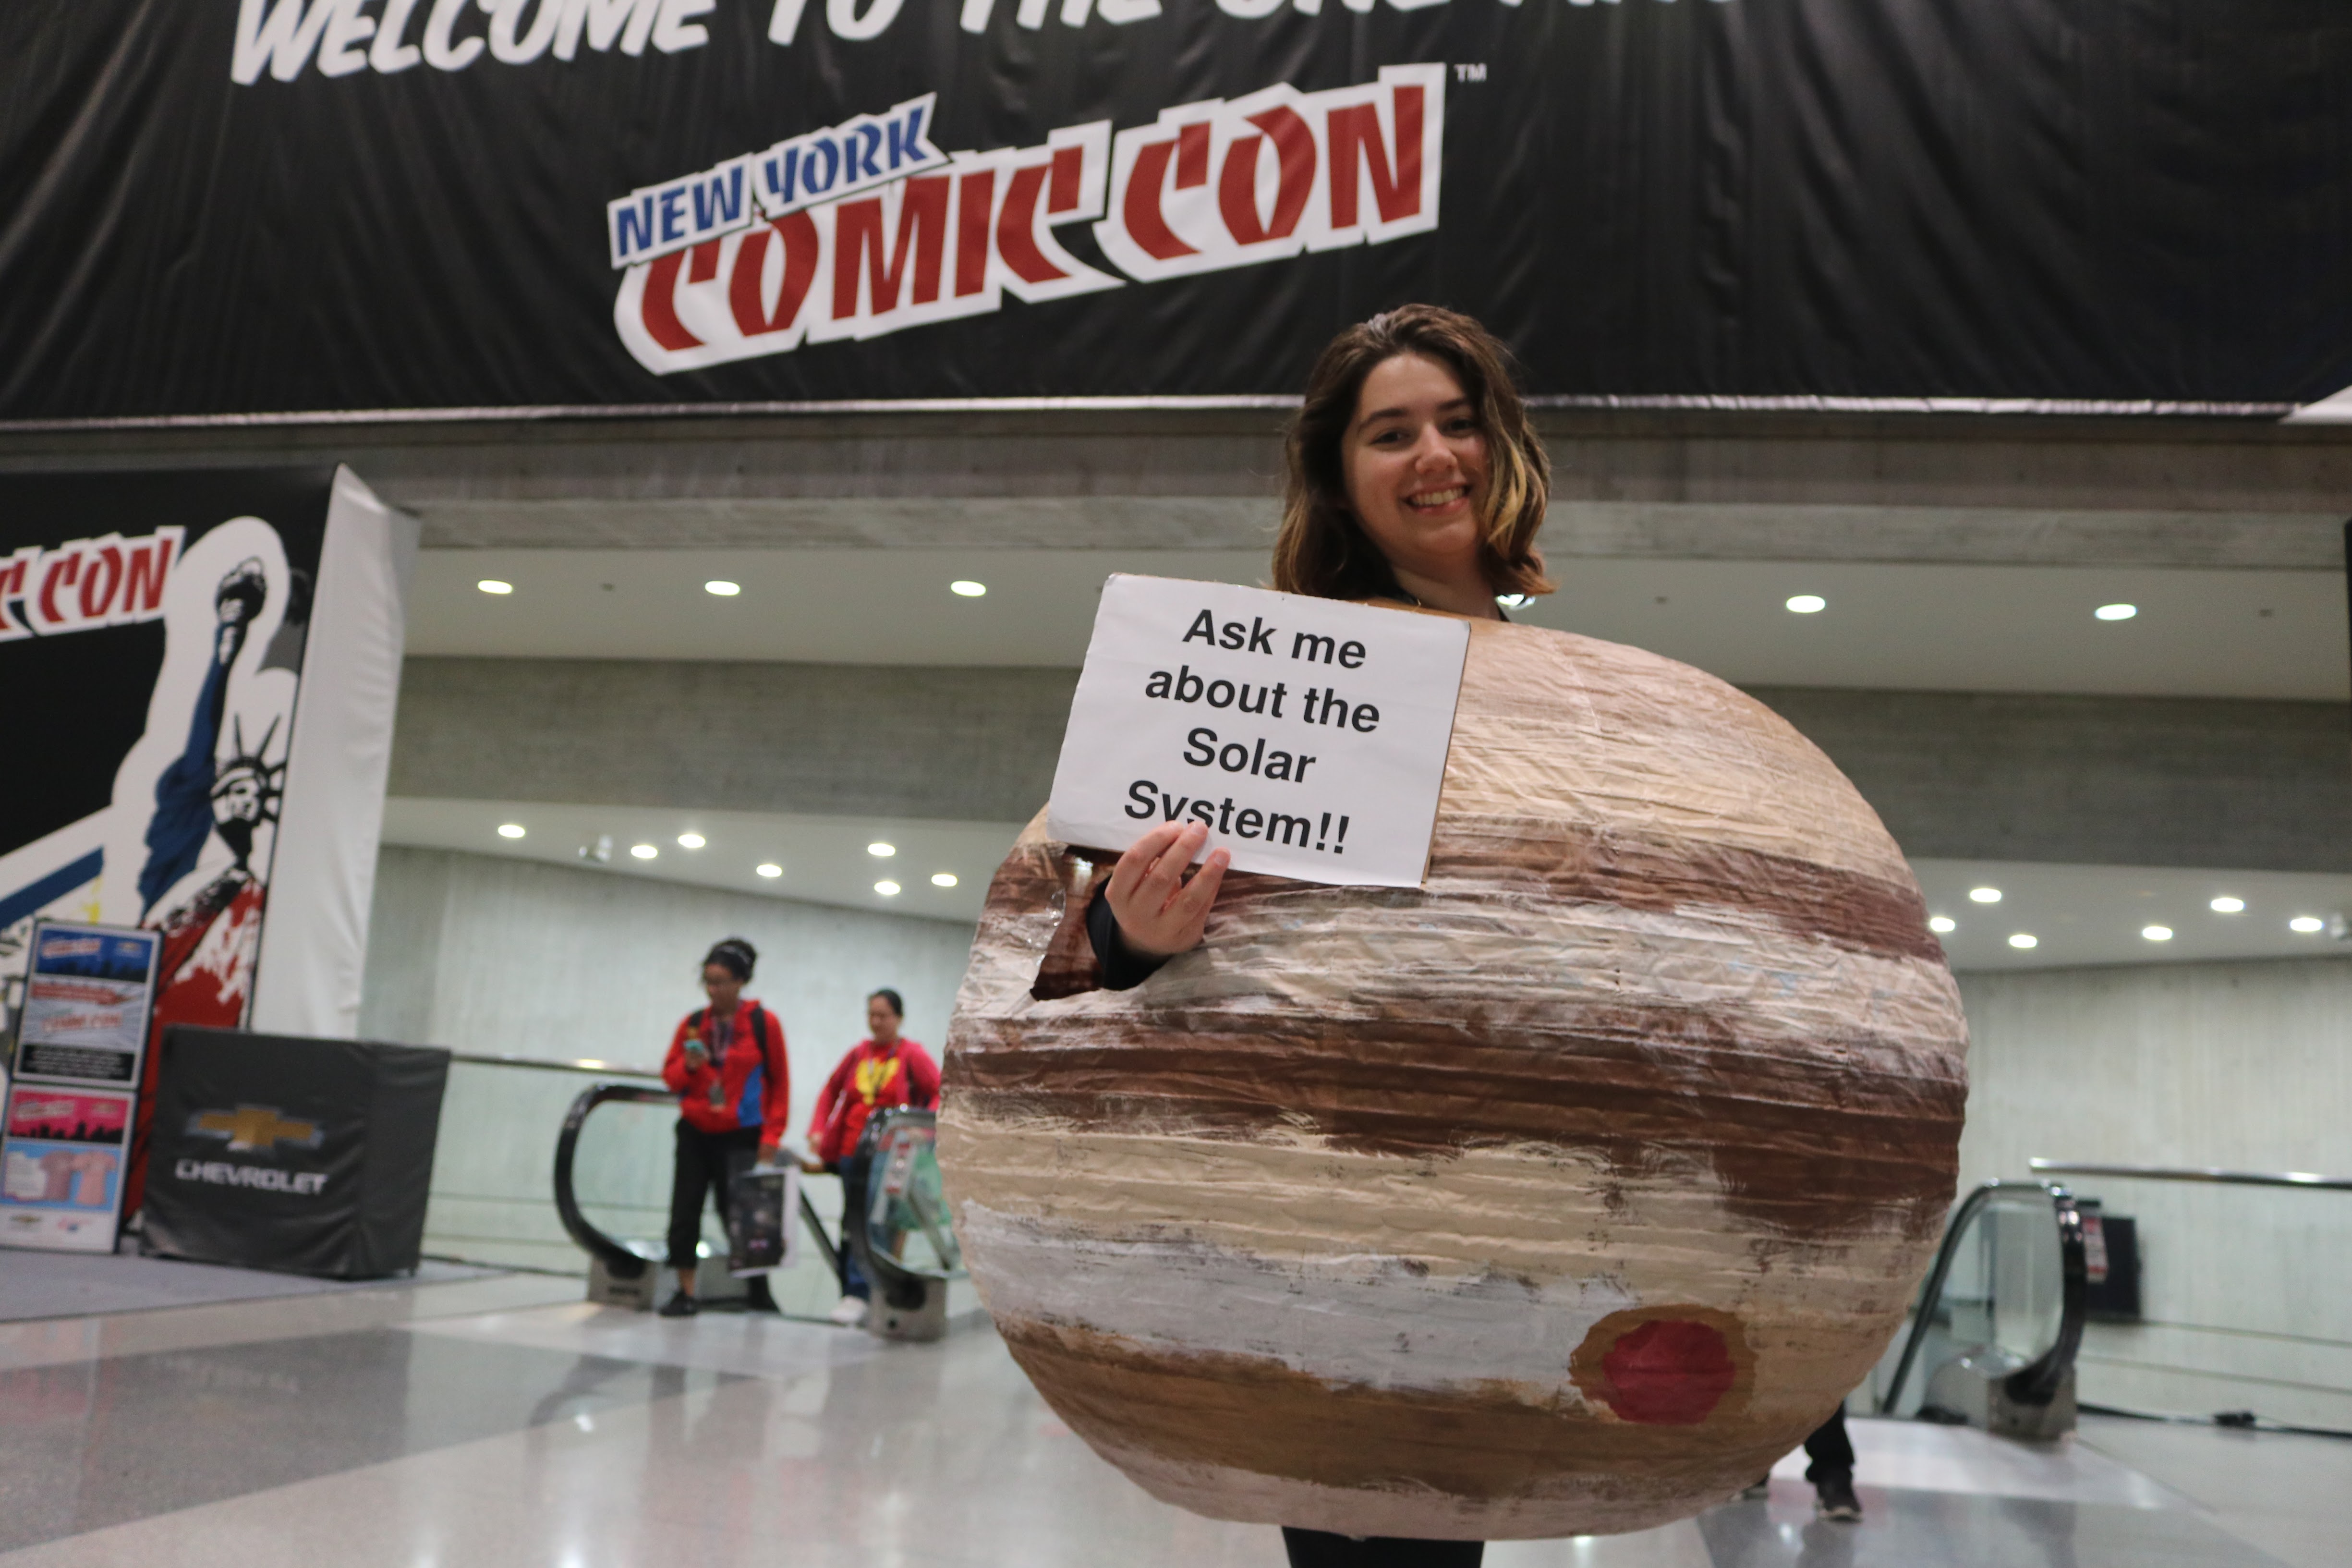 Jupiter visited New York Comic Con